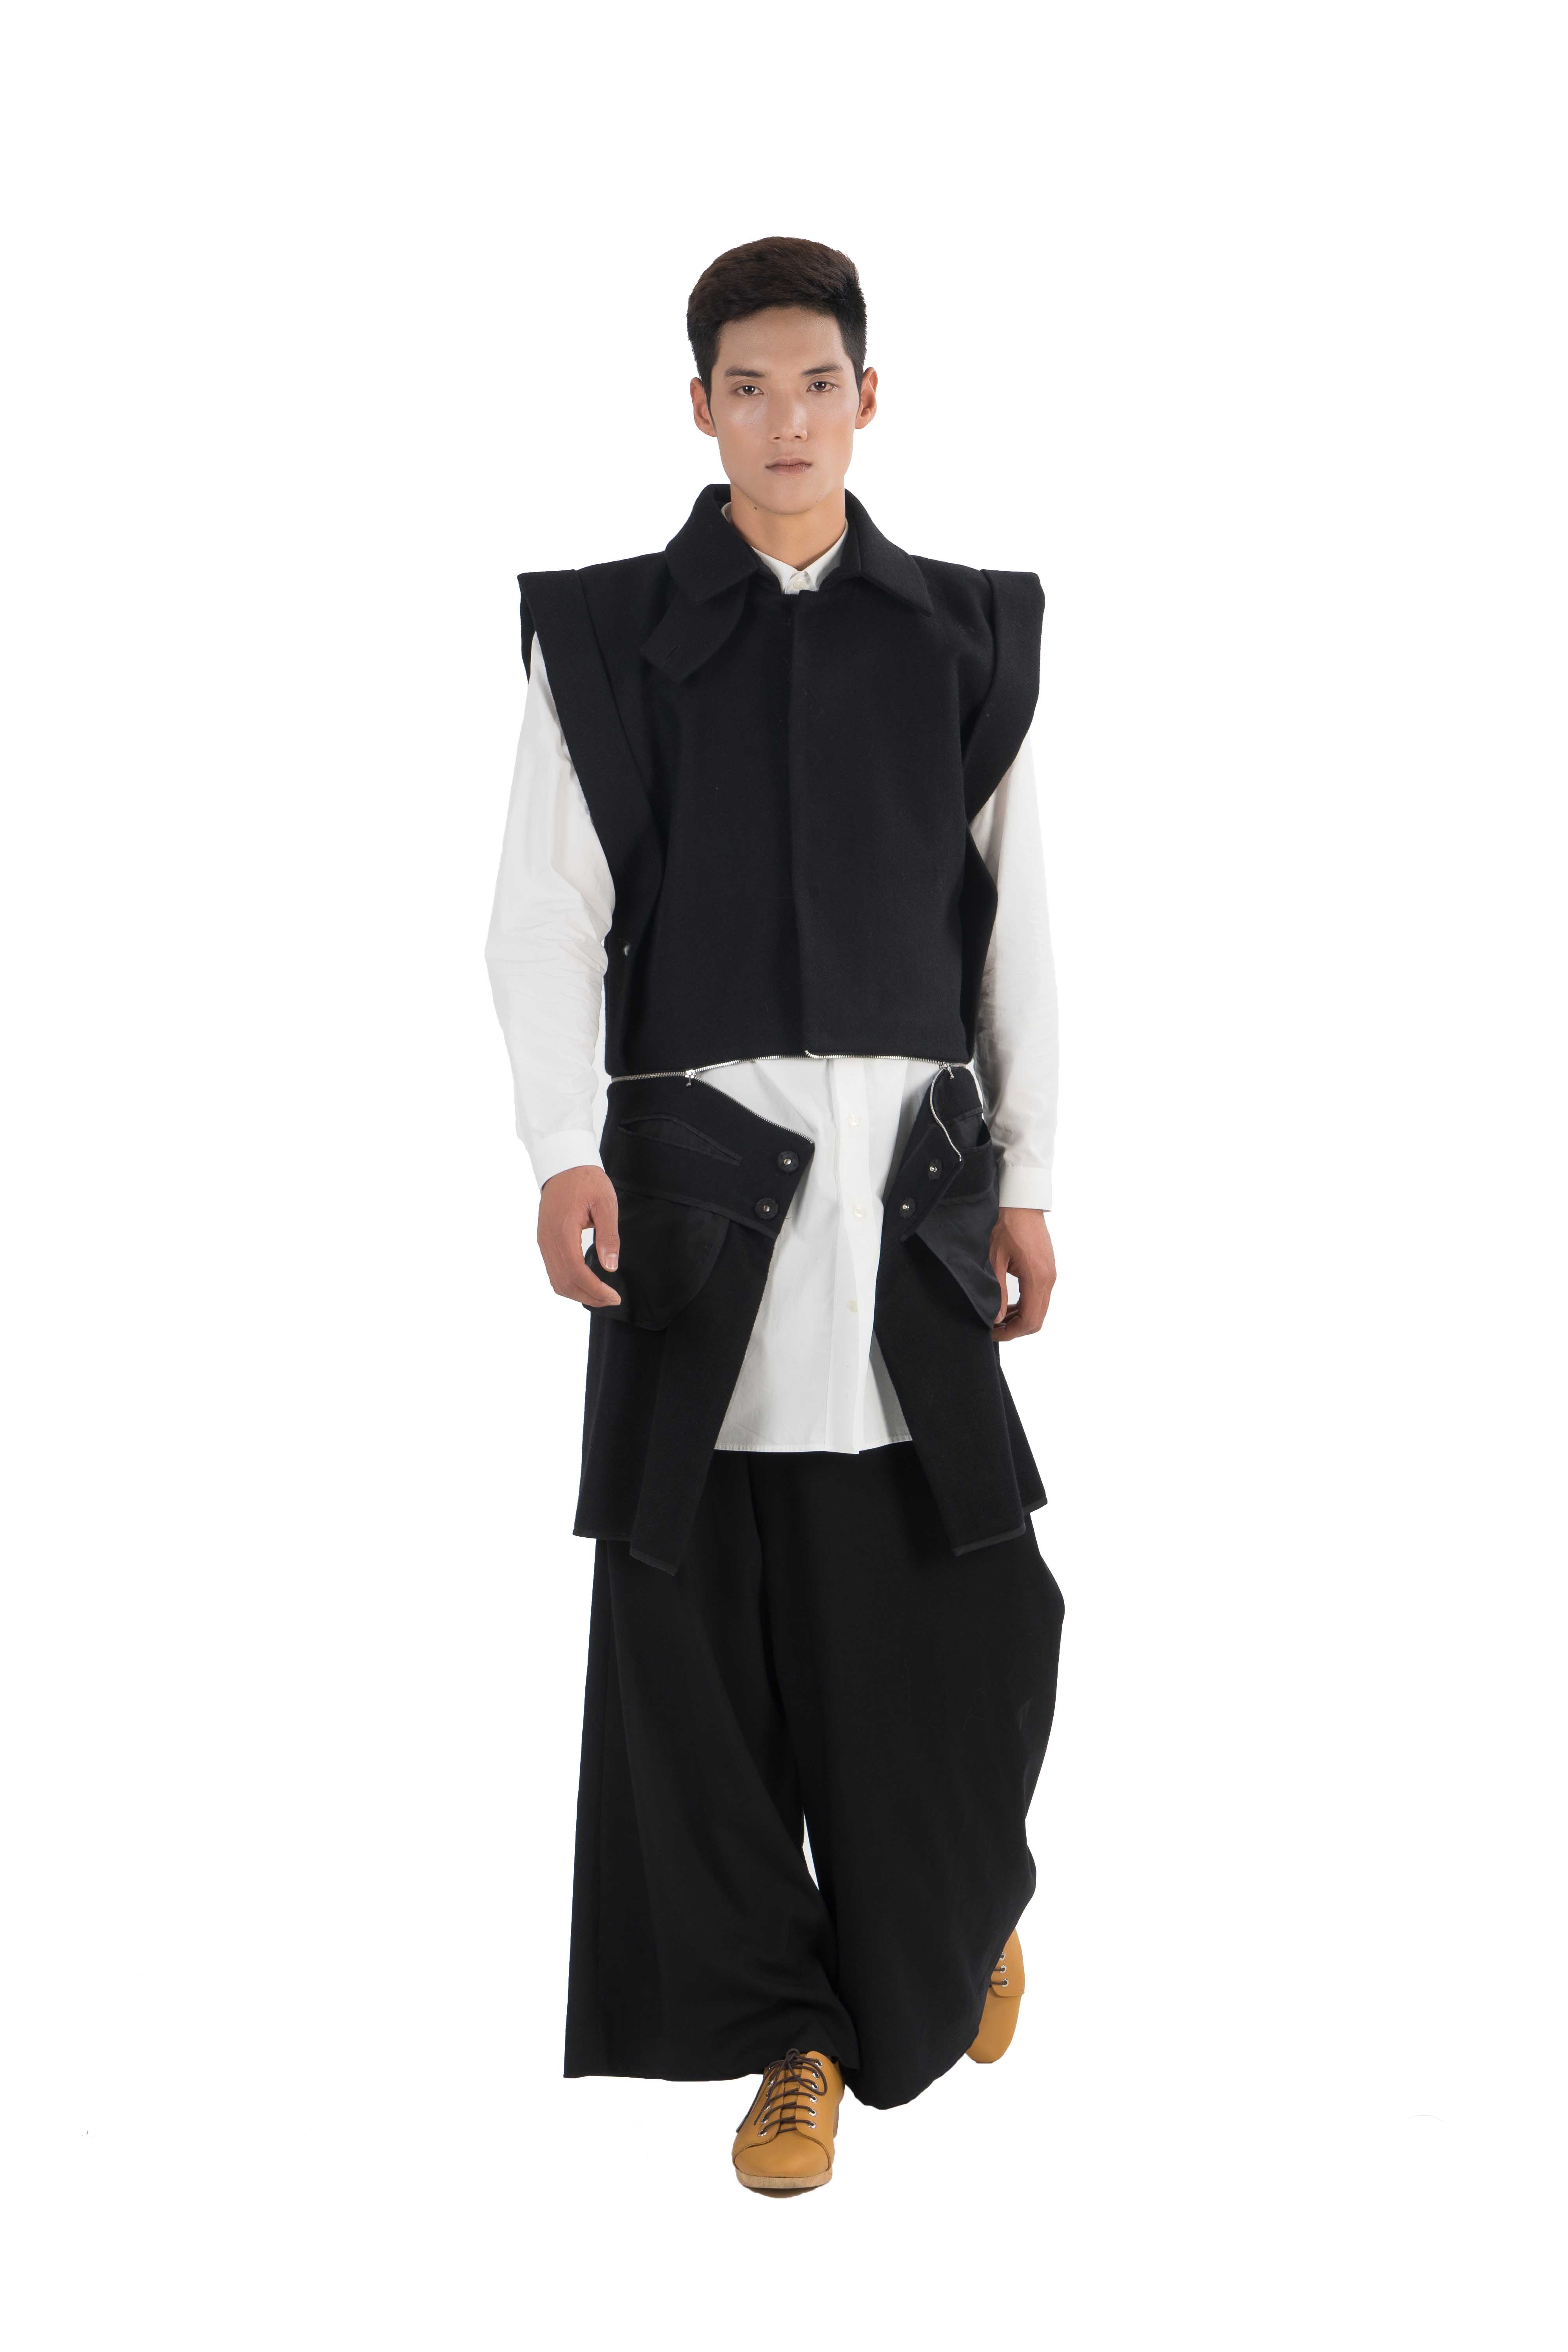 Knee length sleeveless samourai style jacket